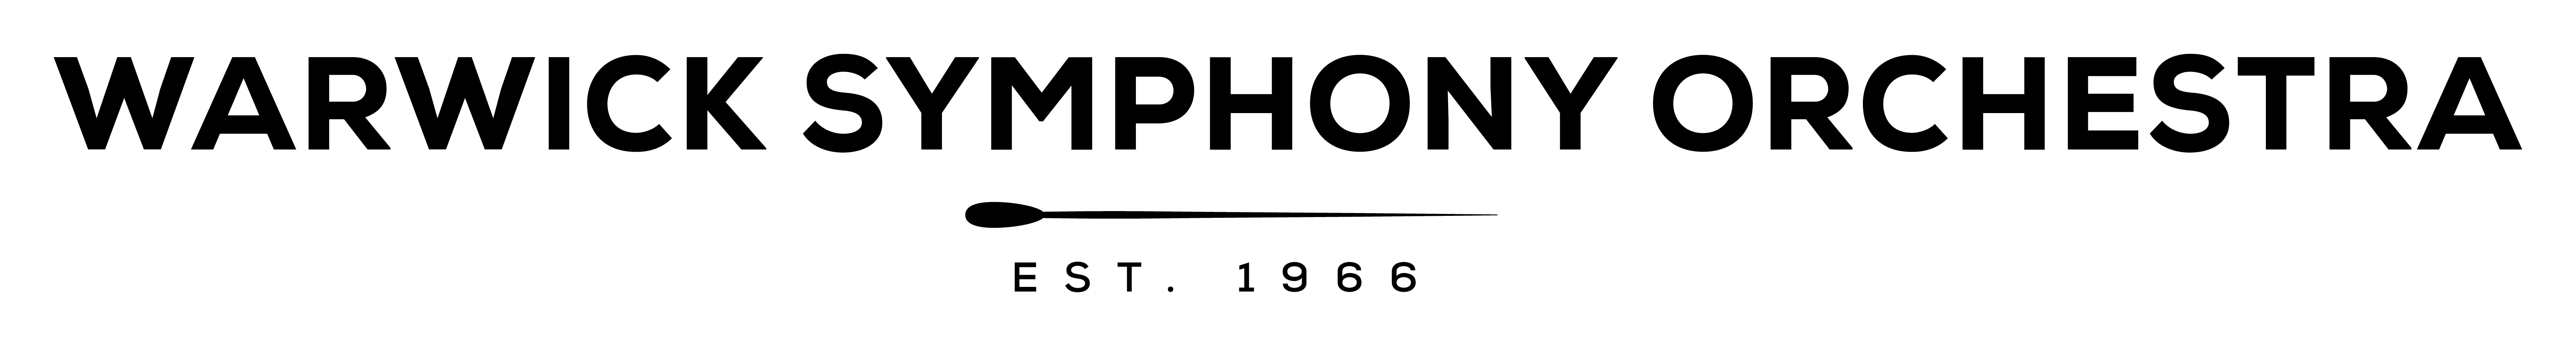 Warwick Symphony Orchestra logo